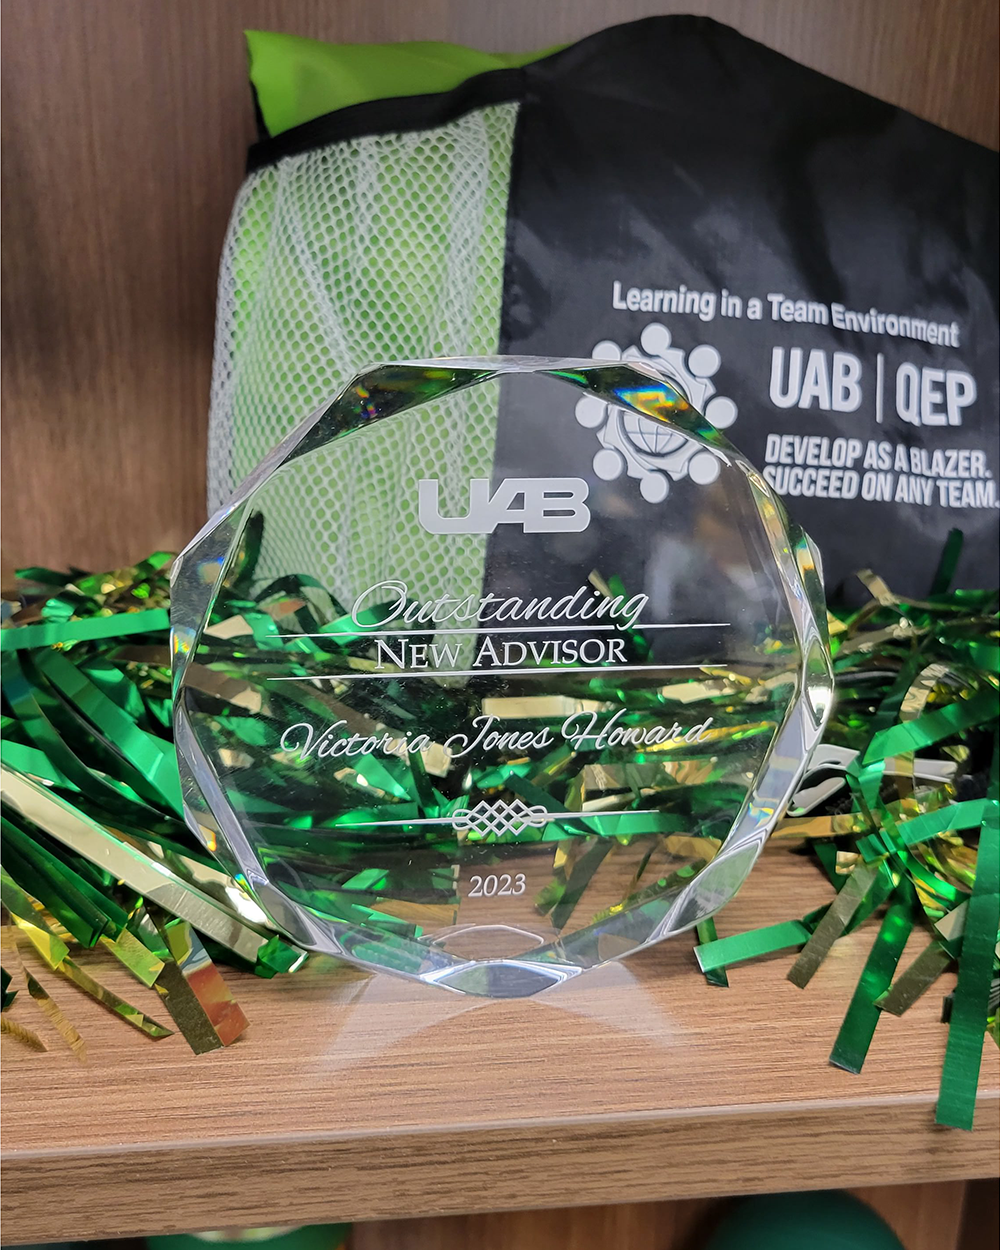 Victoria Jones Howard's UAB Outstanding New Advisor Award displayed on her office shelf.